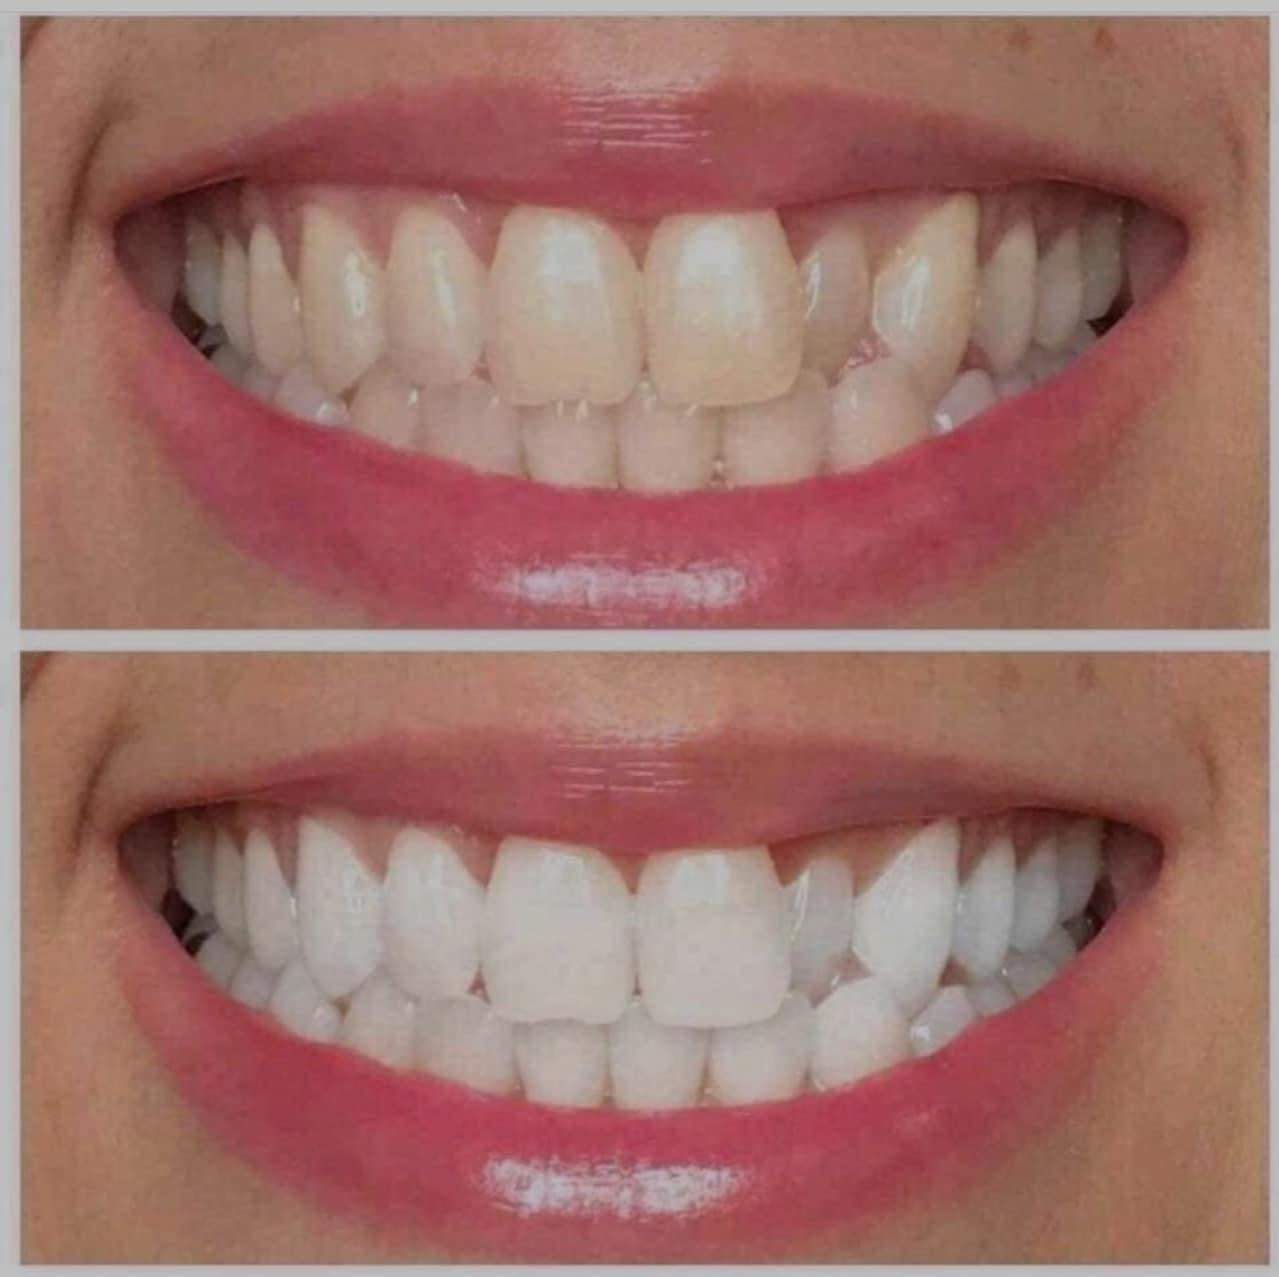 Ultraviolet Pearly White Teeth
Whitening Gel